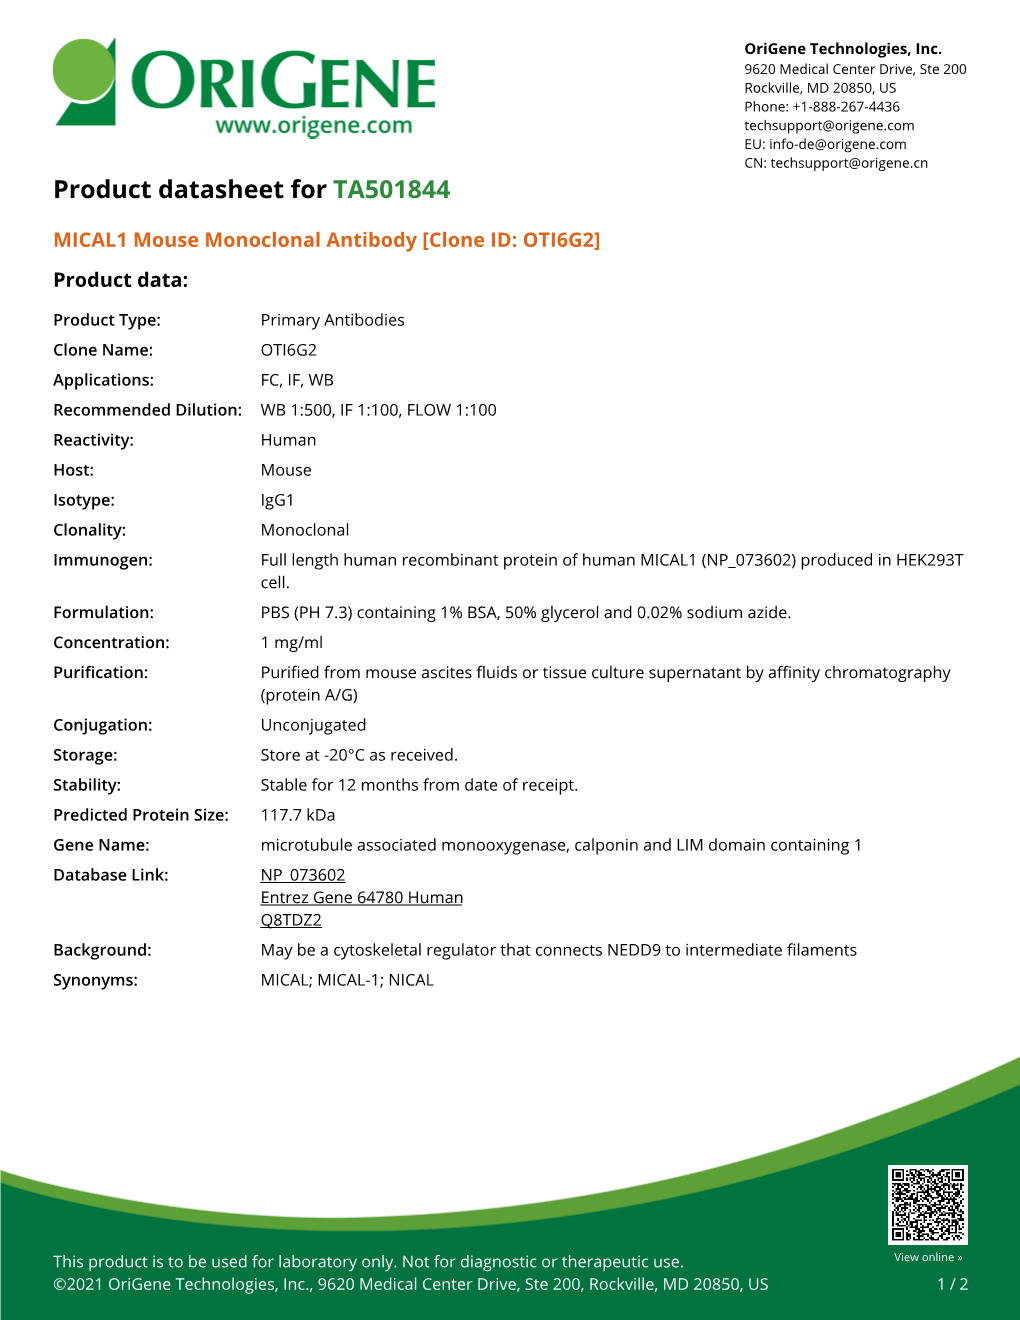 MICAL1 Mouse Monoclonal Antibody [Clone ID: OTI6G2] Product Data